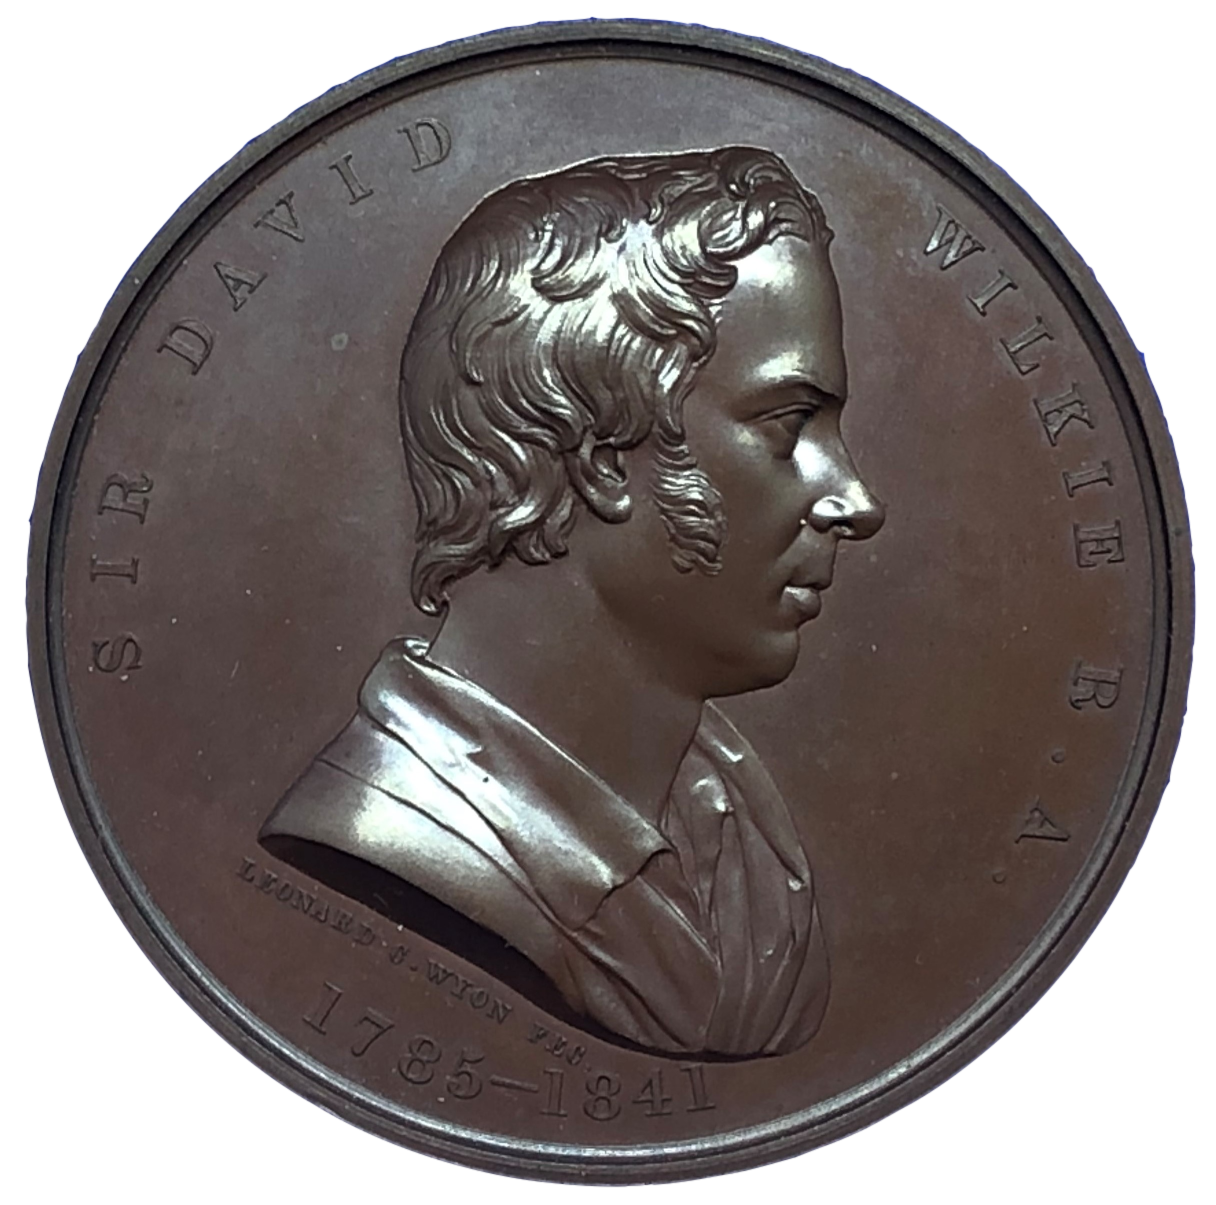 1861 David Wilkie, Painter Historical Medallion by L C Wyon Obverse